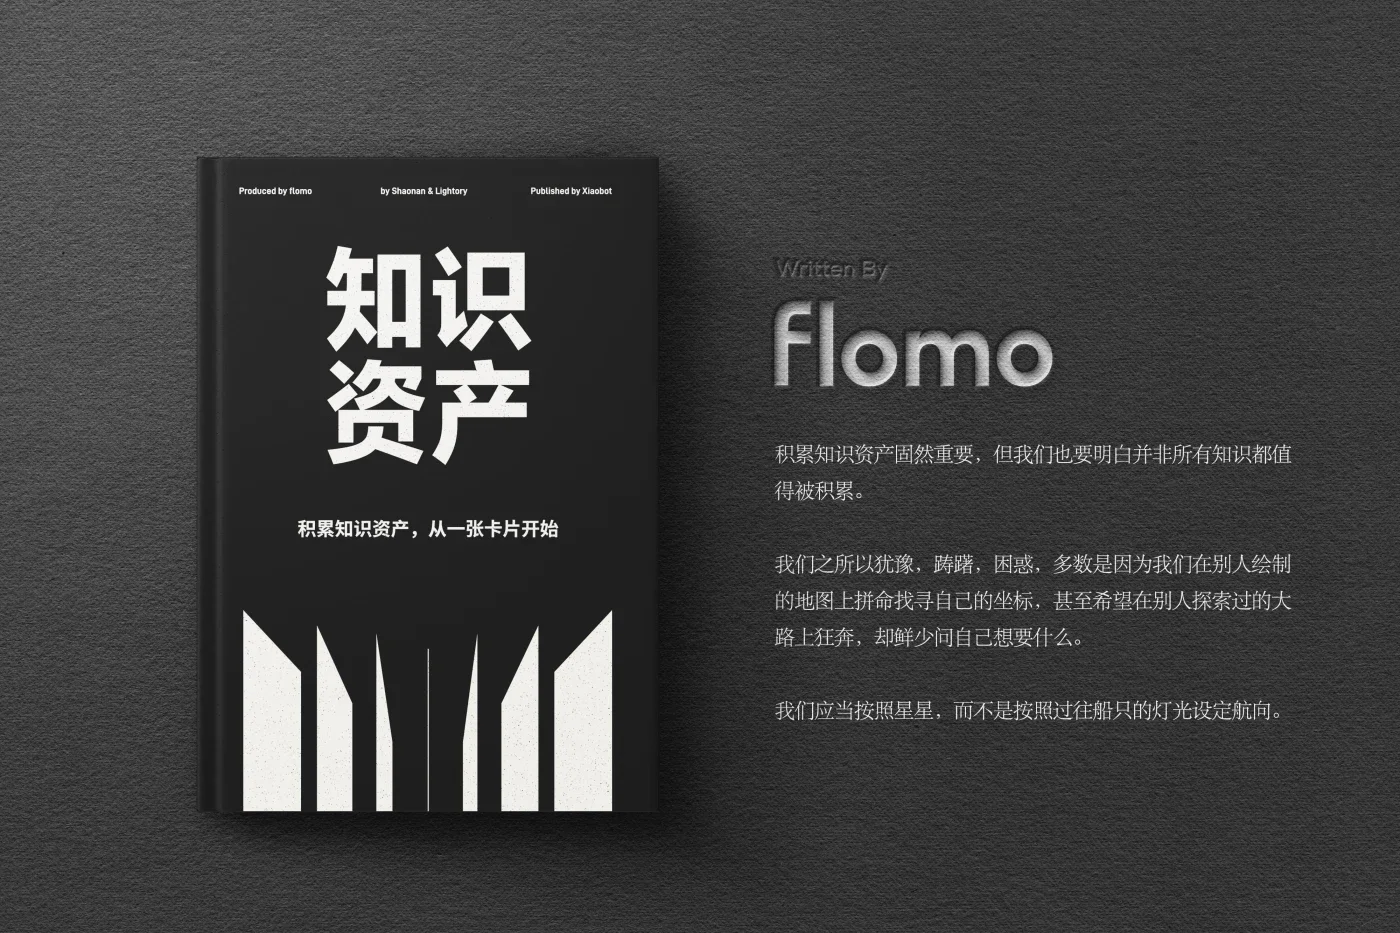 https://flomo-resource.oss-cn-shanghai.aliyuncs.com/101/card-title.webp!webp